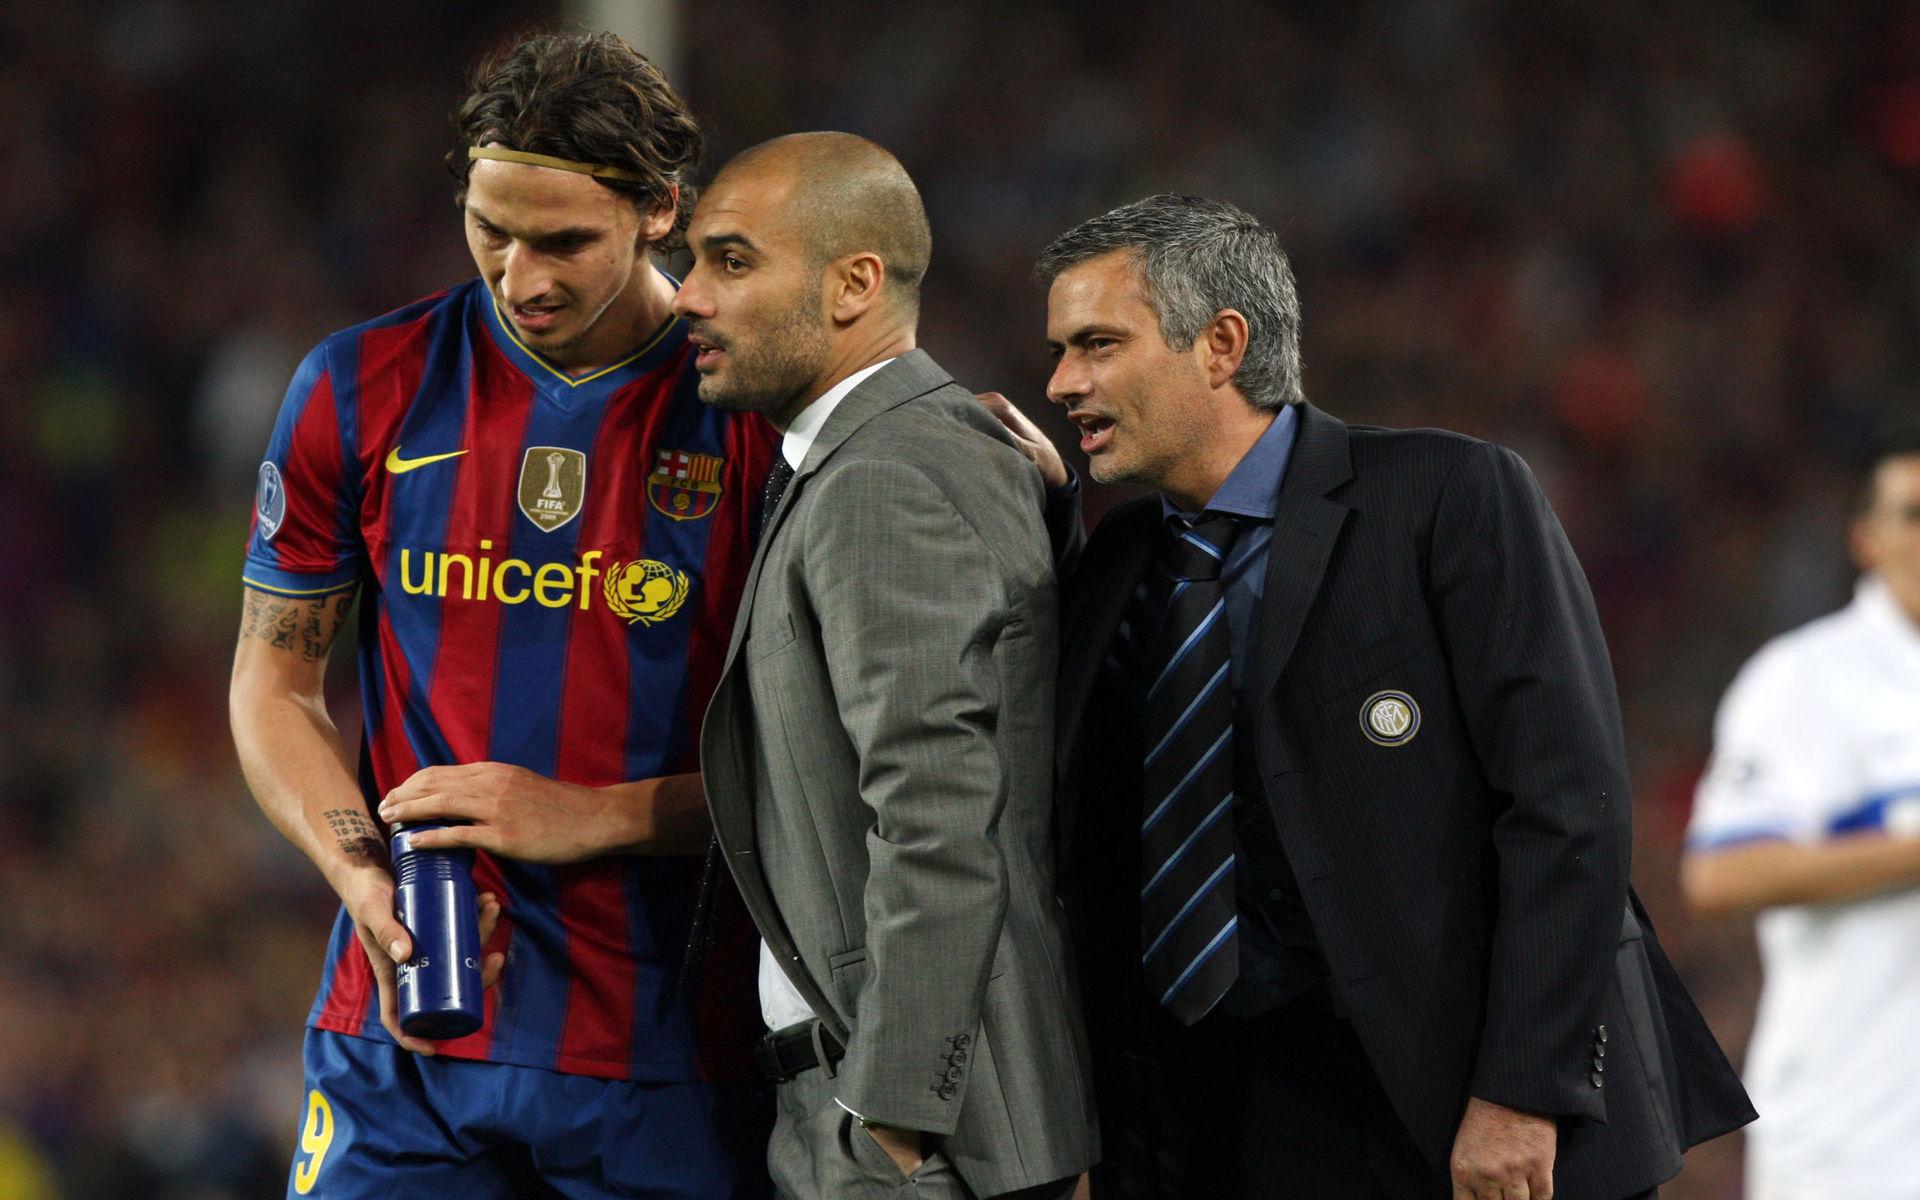 José Mourinho berättar nu vad han viskade bakom Zlatan Ibrahimovics och Pep Guardiolas rygg 2010.